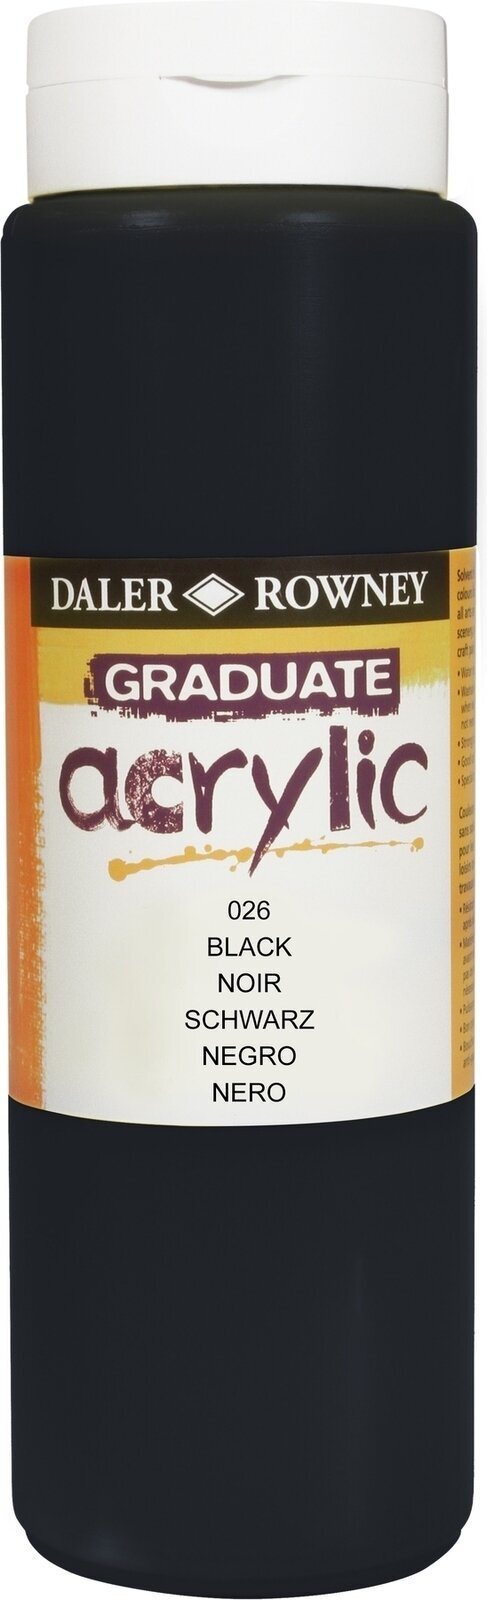 Akrylmaling Daler Rowney Graduate Akrylmaling Black 500 ml 1 stk.